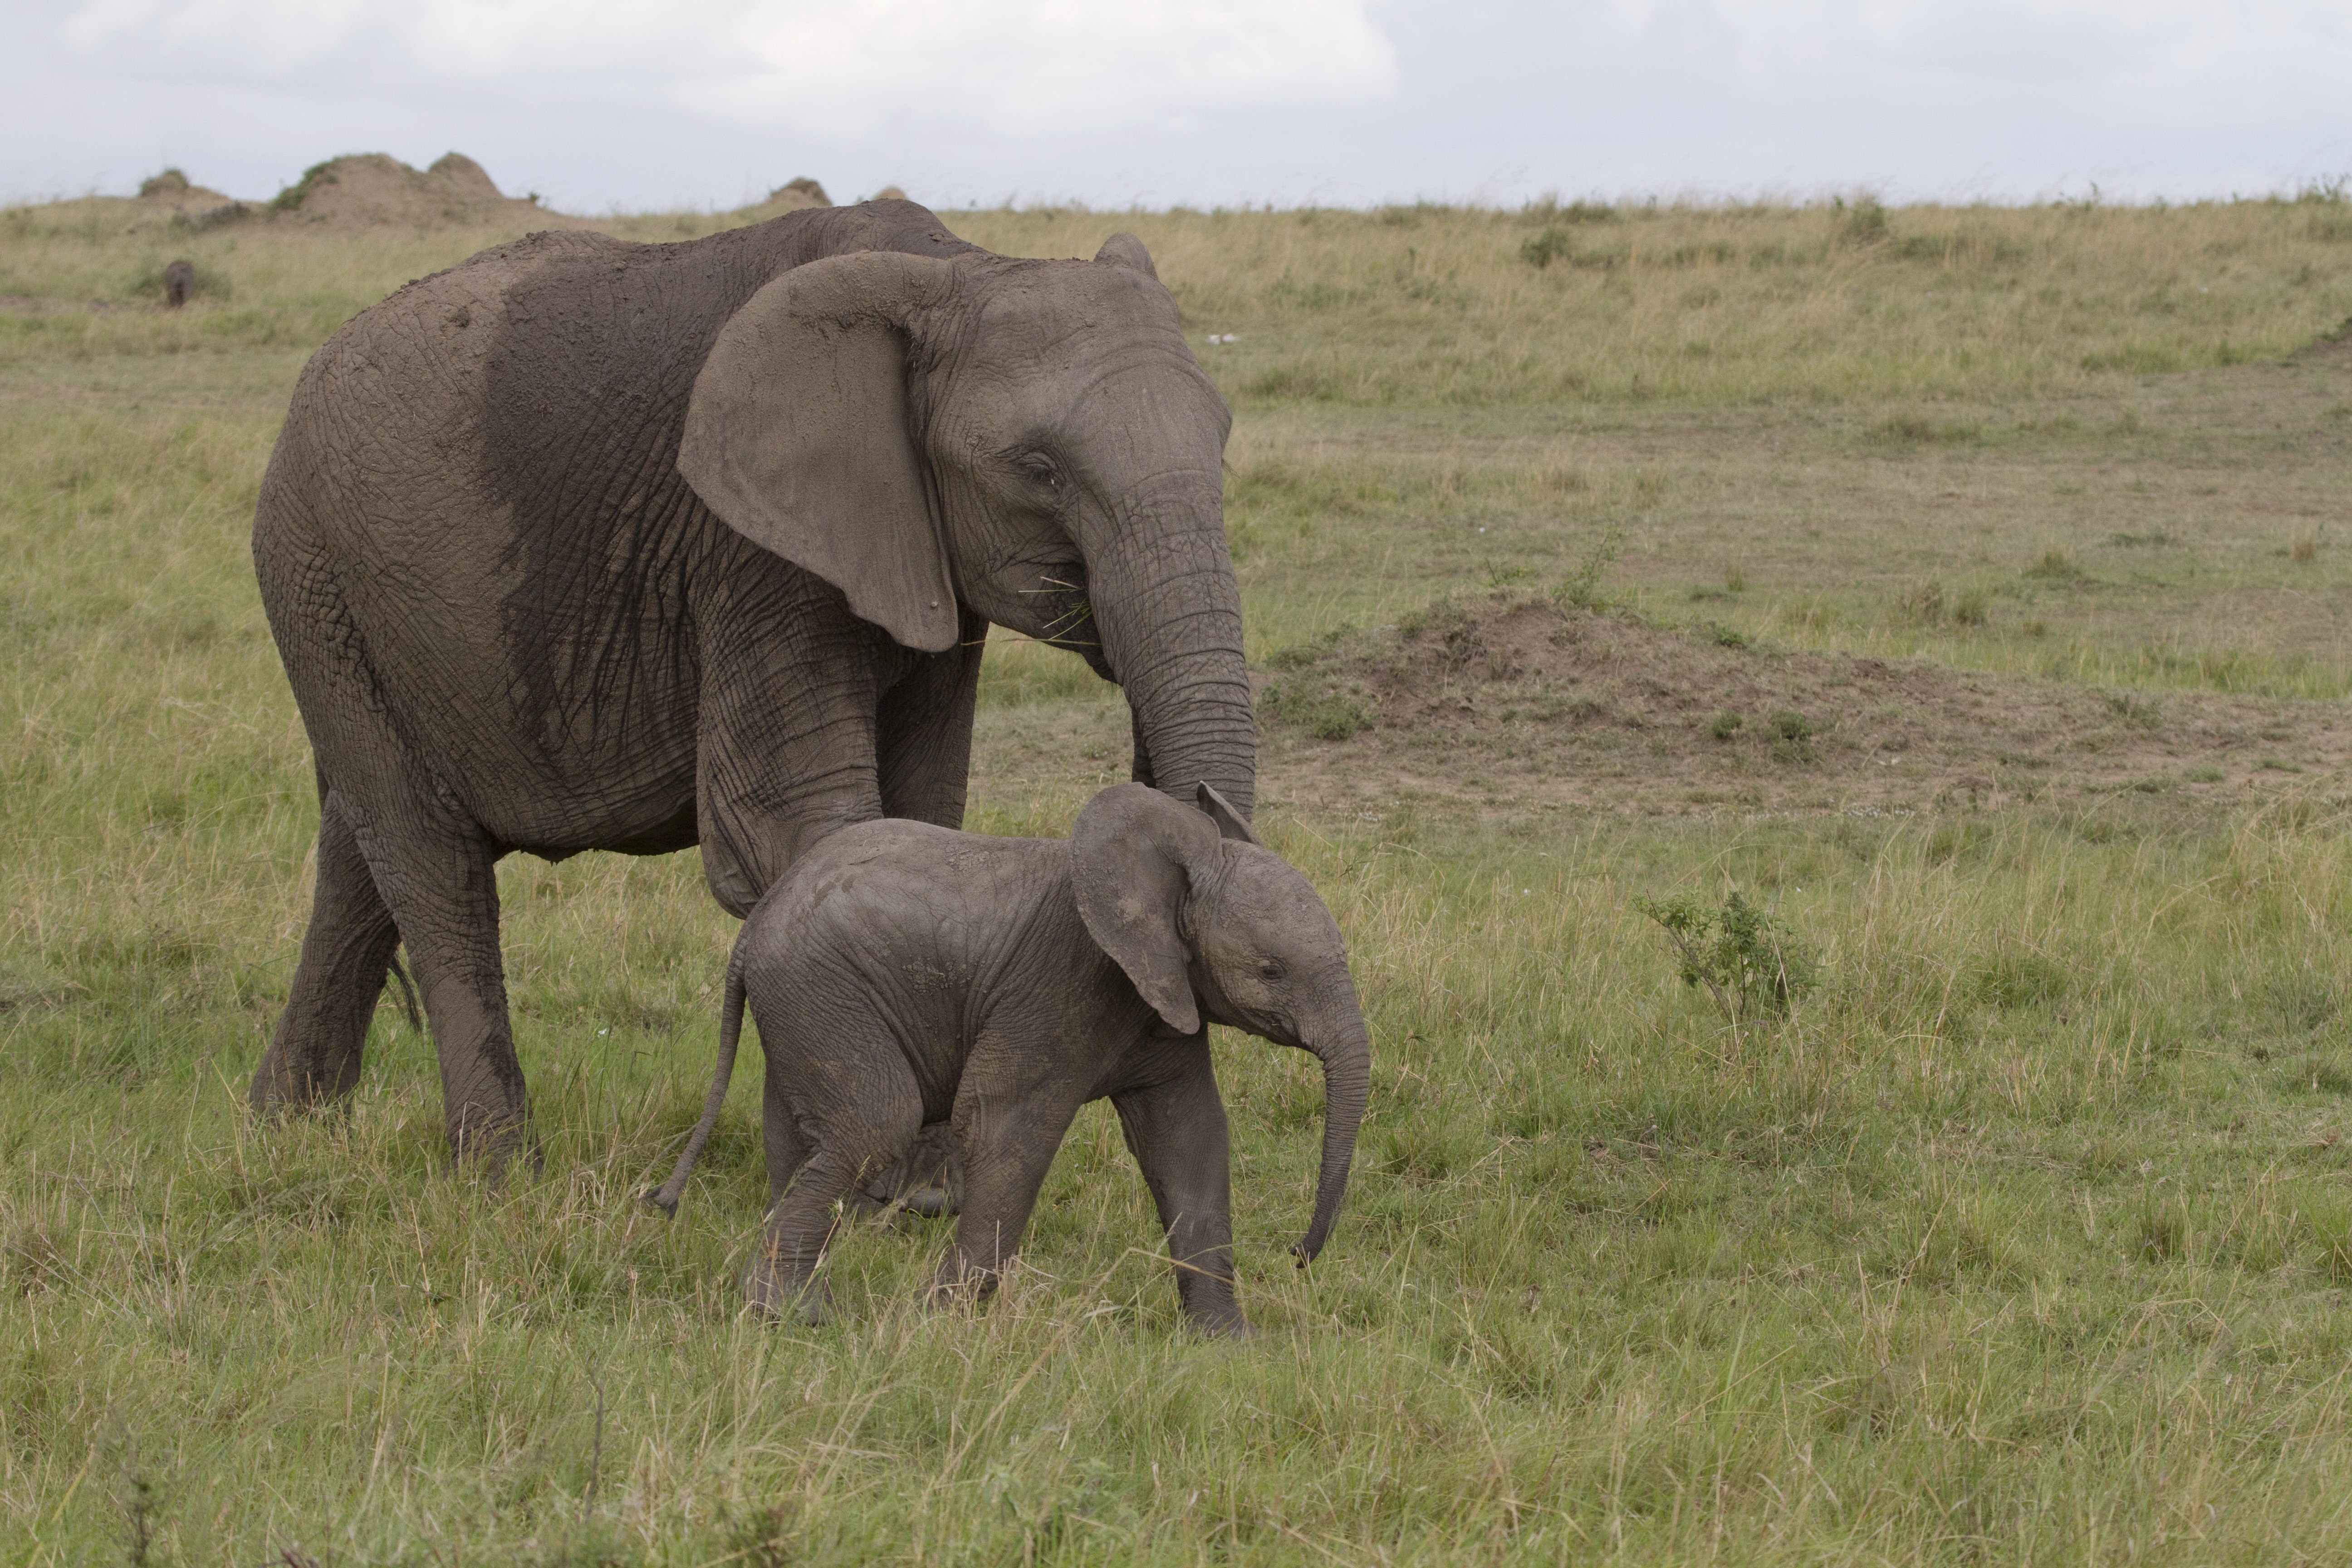 147183 Hintergrundbild herunterladen tiere, natur, liebe, elefant, elefanten, afrika, elefantenkalb, baby elefant - Bildschirmschoner und Bilder kostenlos